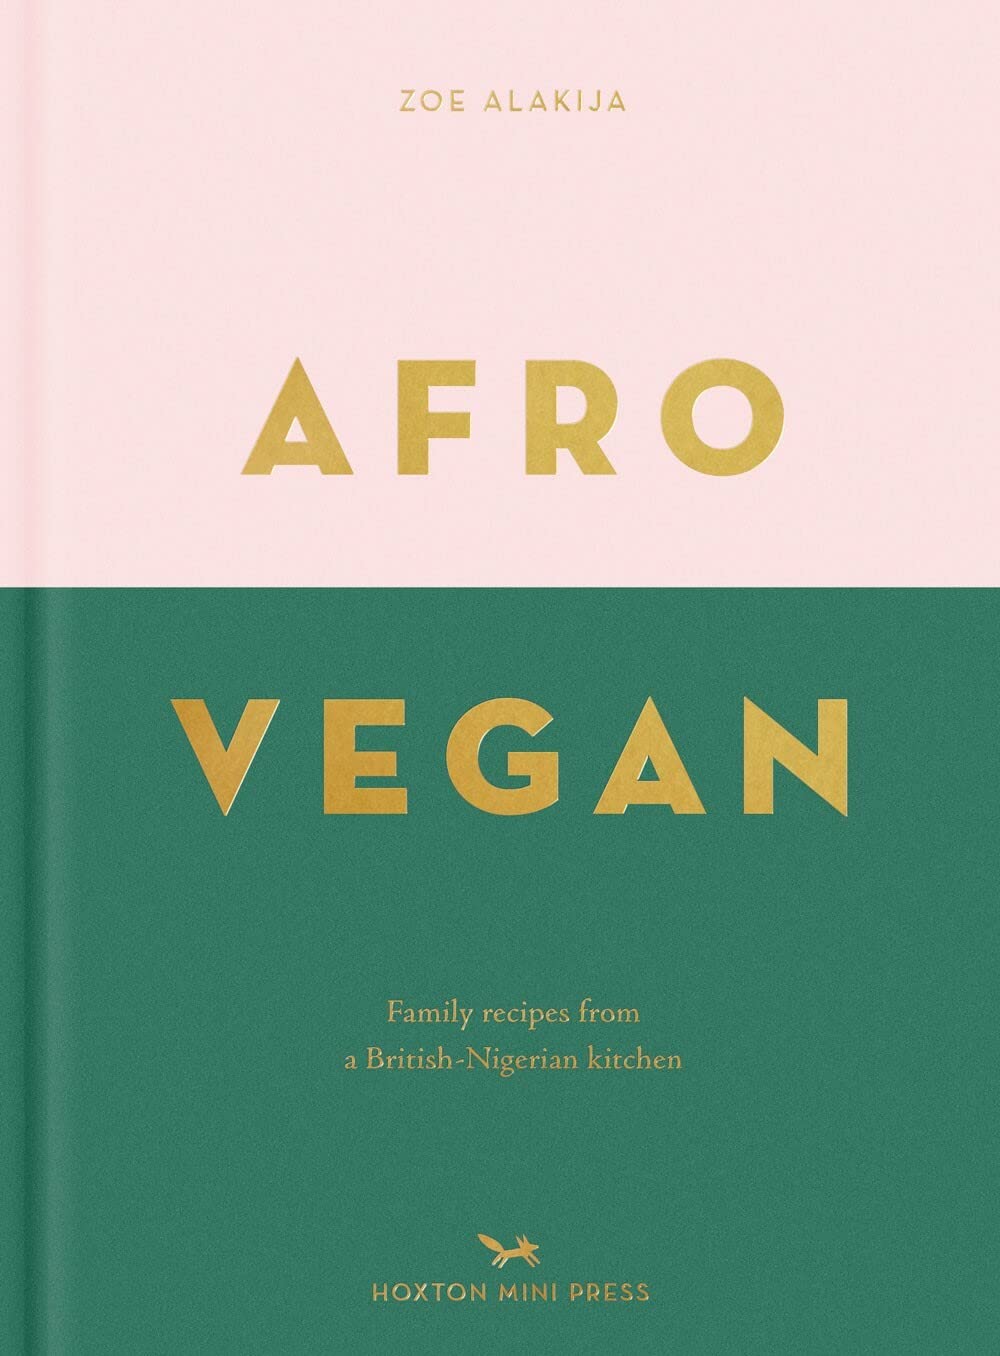 Afro Vegan: Family Recipes